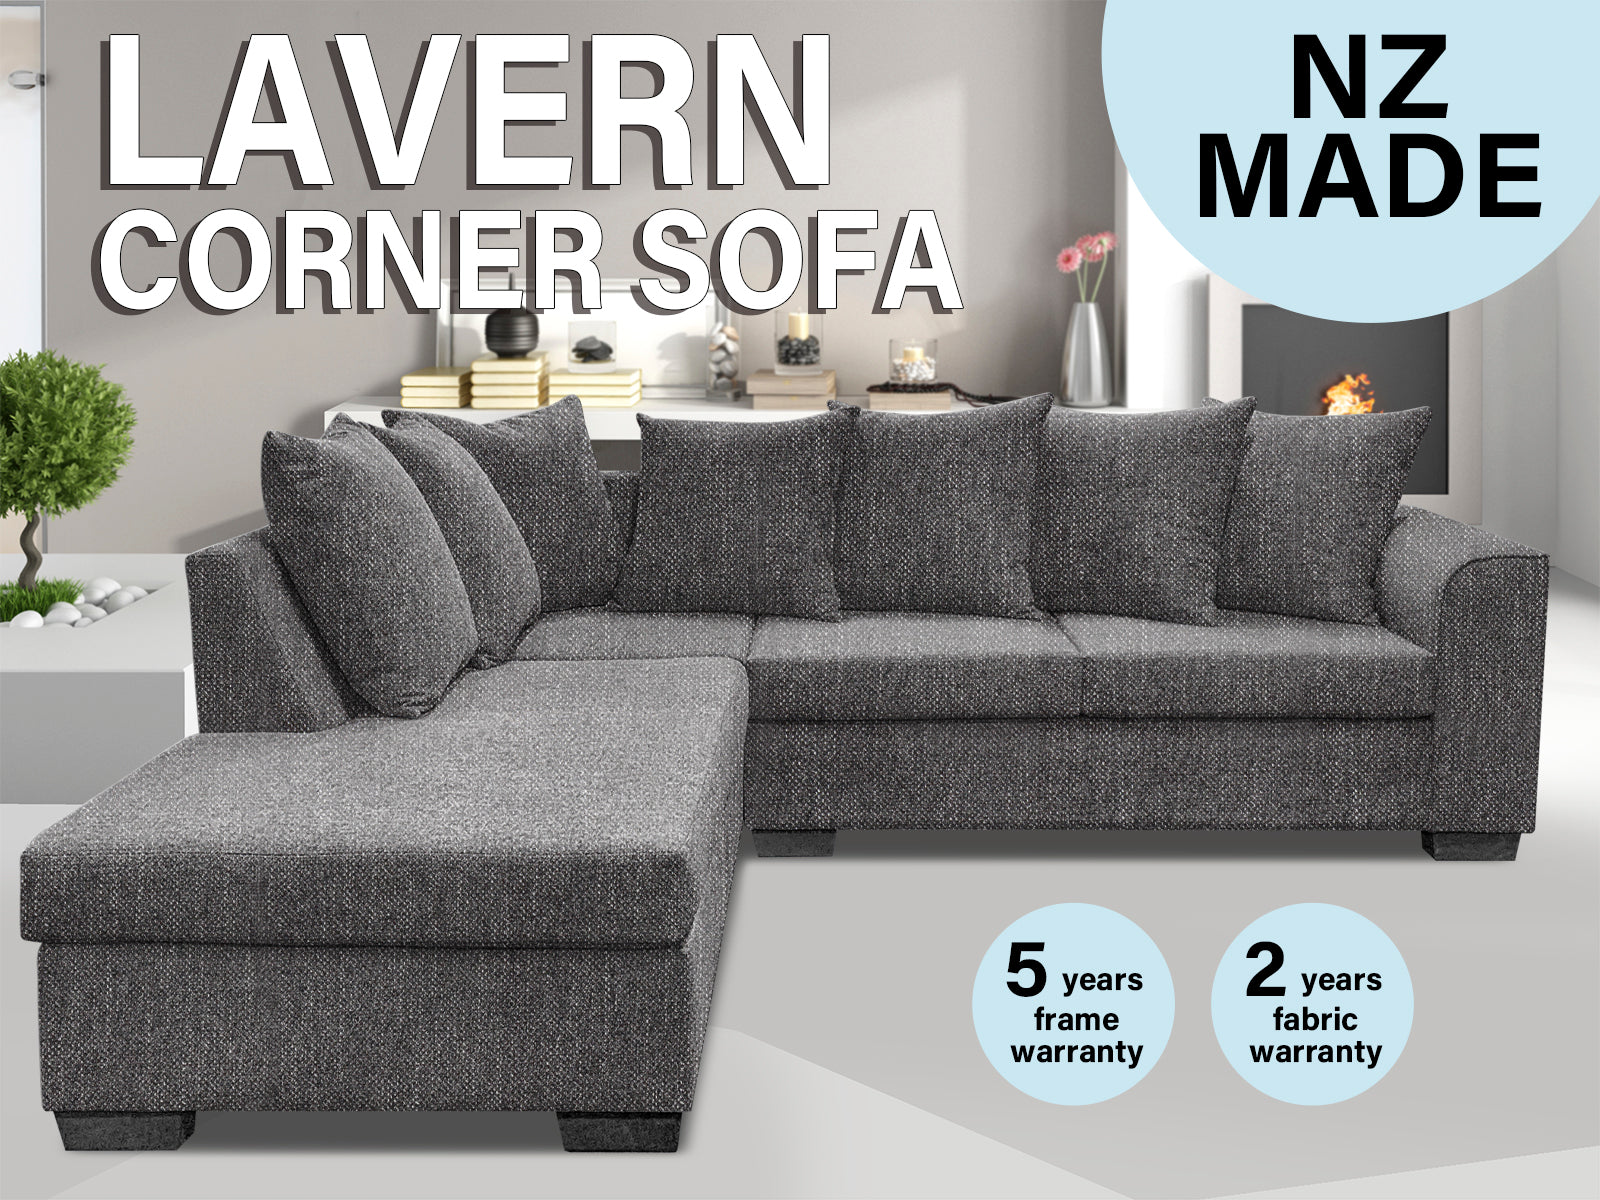 DS NZ made Lavern corner sofa kido black